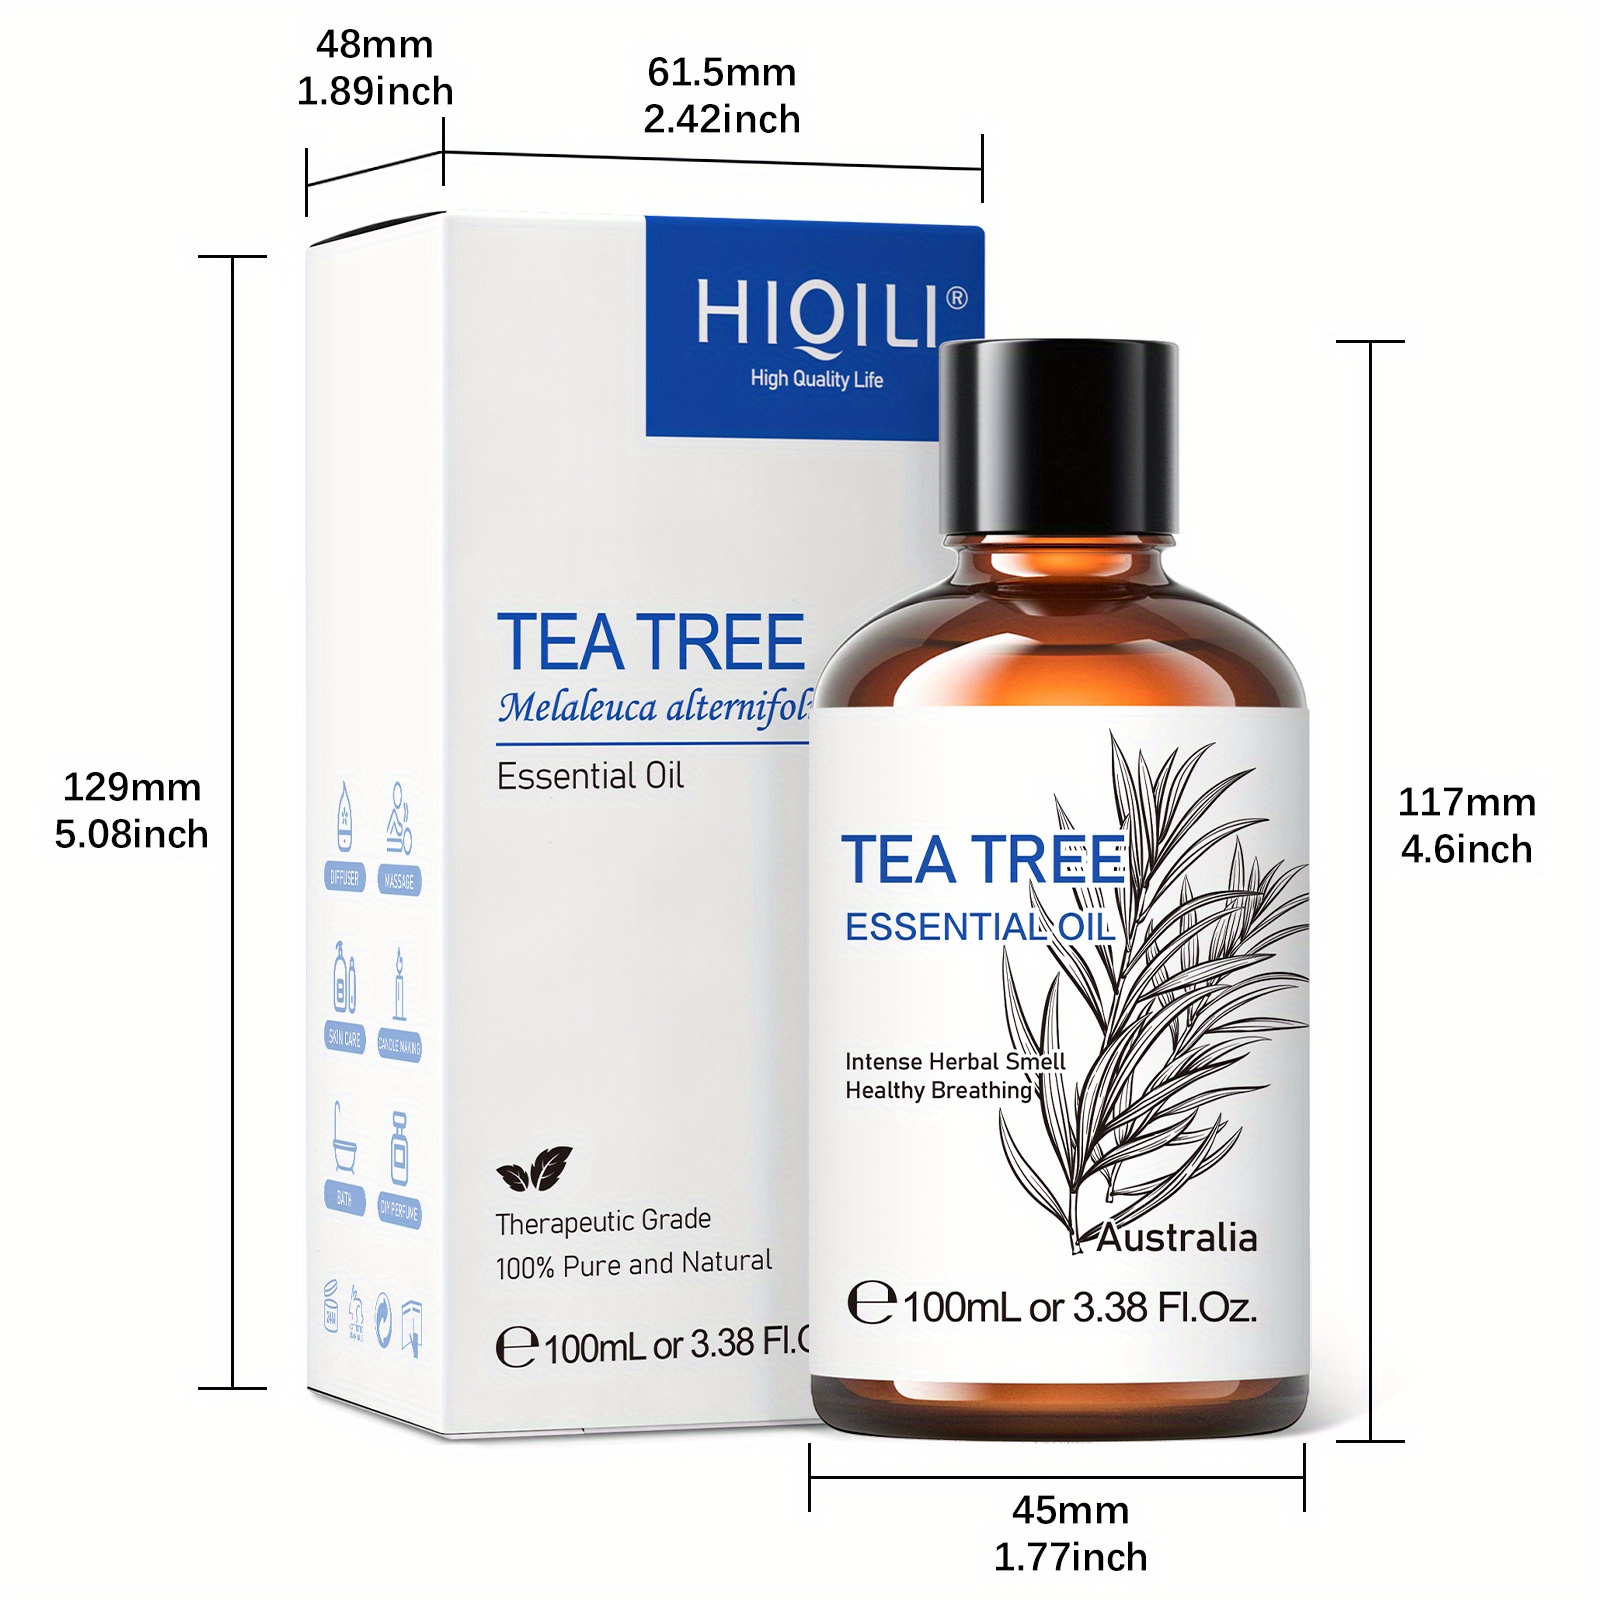 1pc 30 Ml/ 1.01 Fl Oz Tea Tree Essential Oils For Diffuser